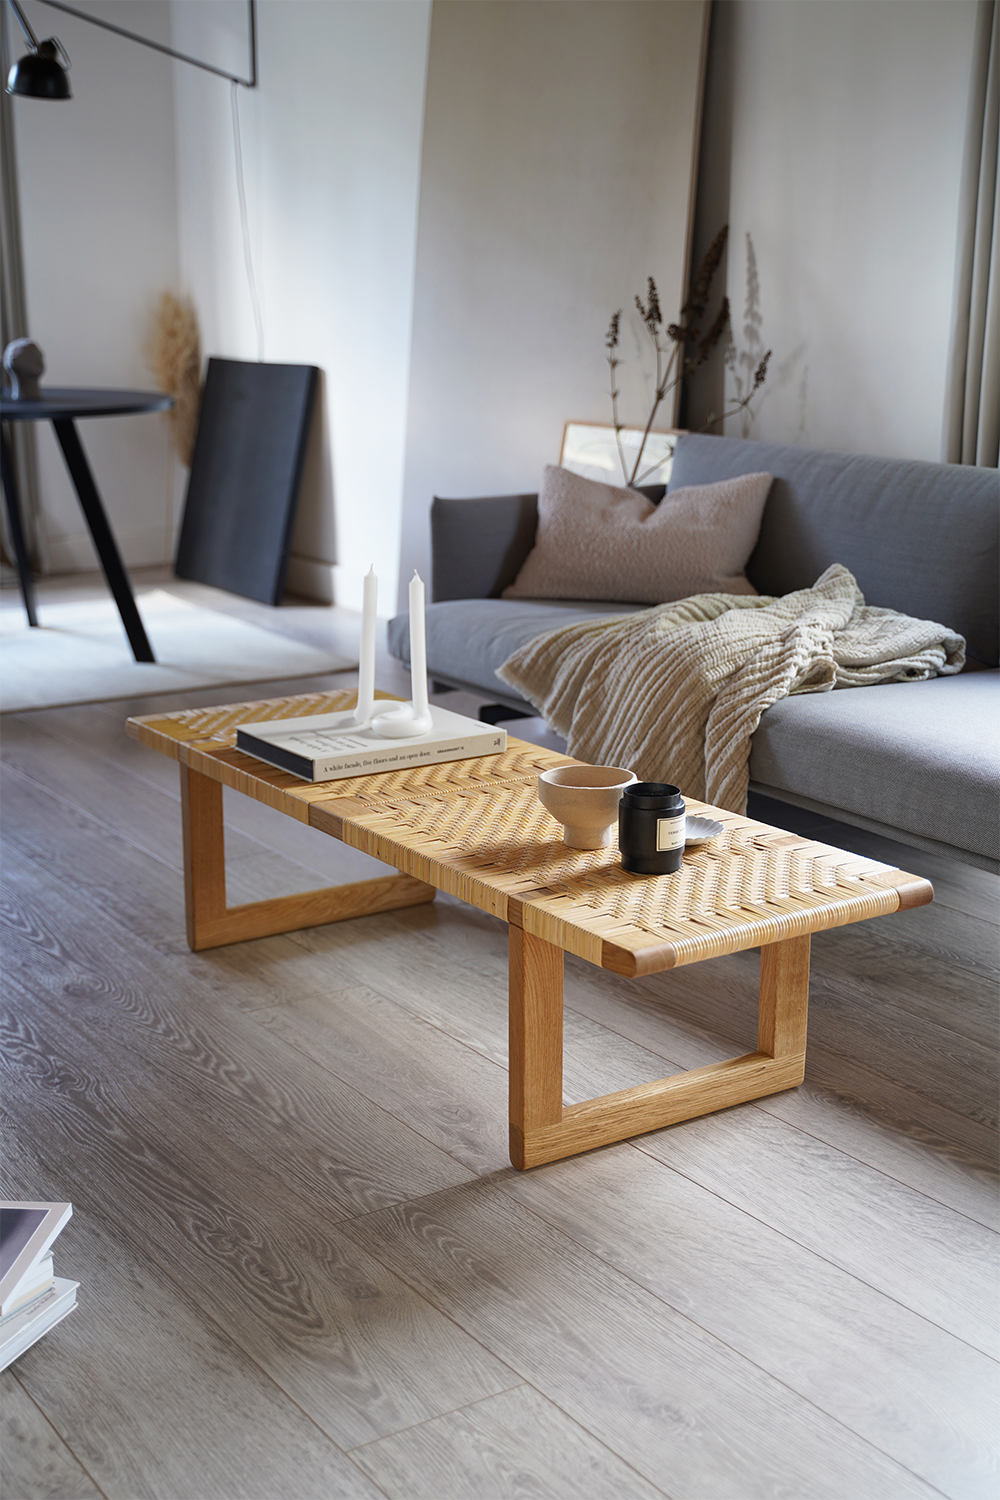 A new Danish Design Classic - The BM0488 Table Bench by Carl Hansen & Son